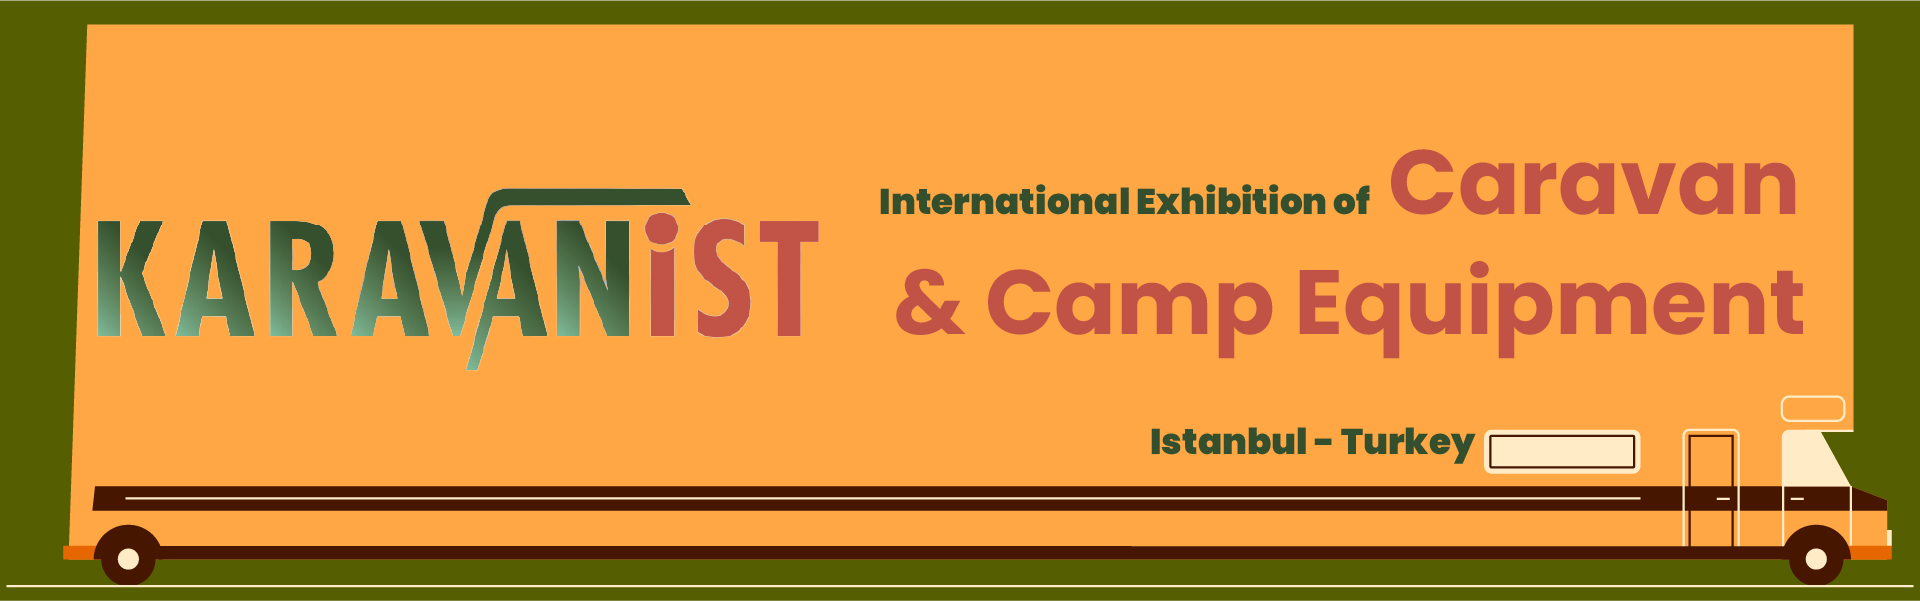 Caravan and Equipment (Karavanİst) Exhibition Istanbul Turkey